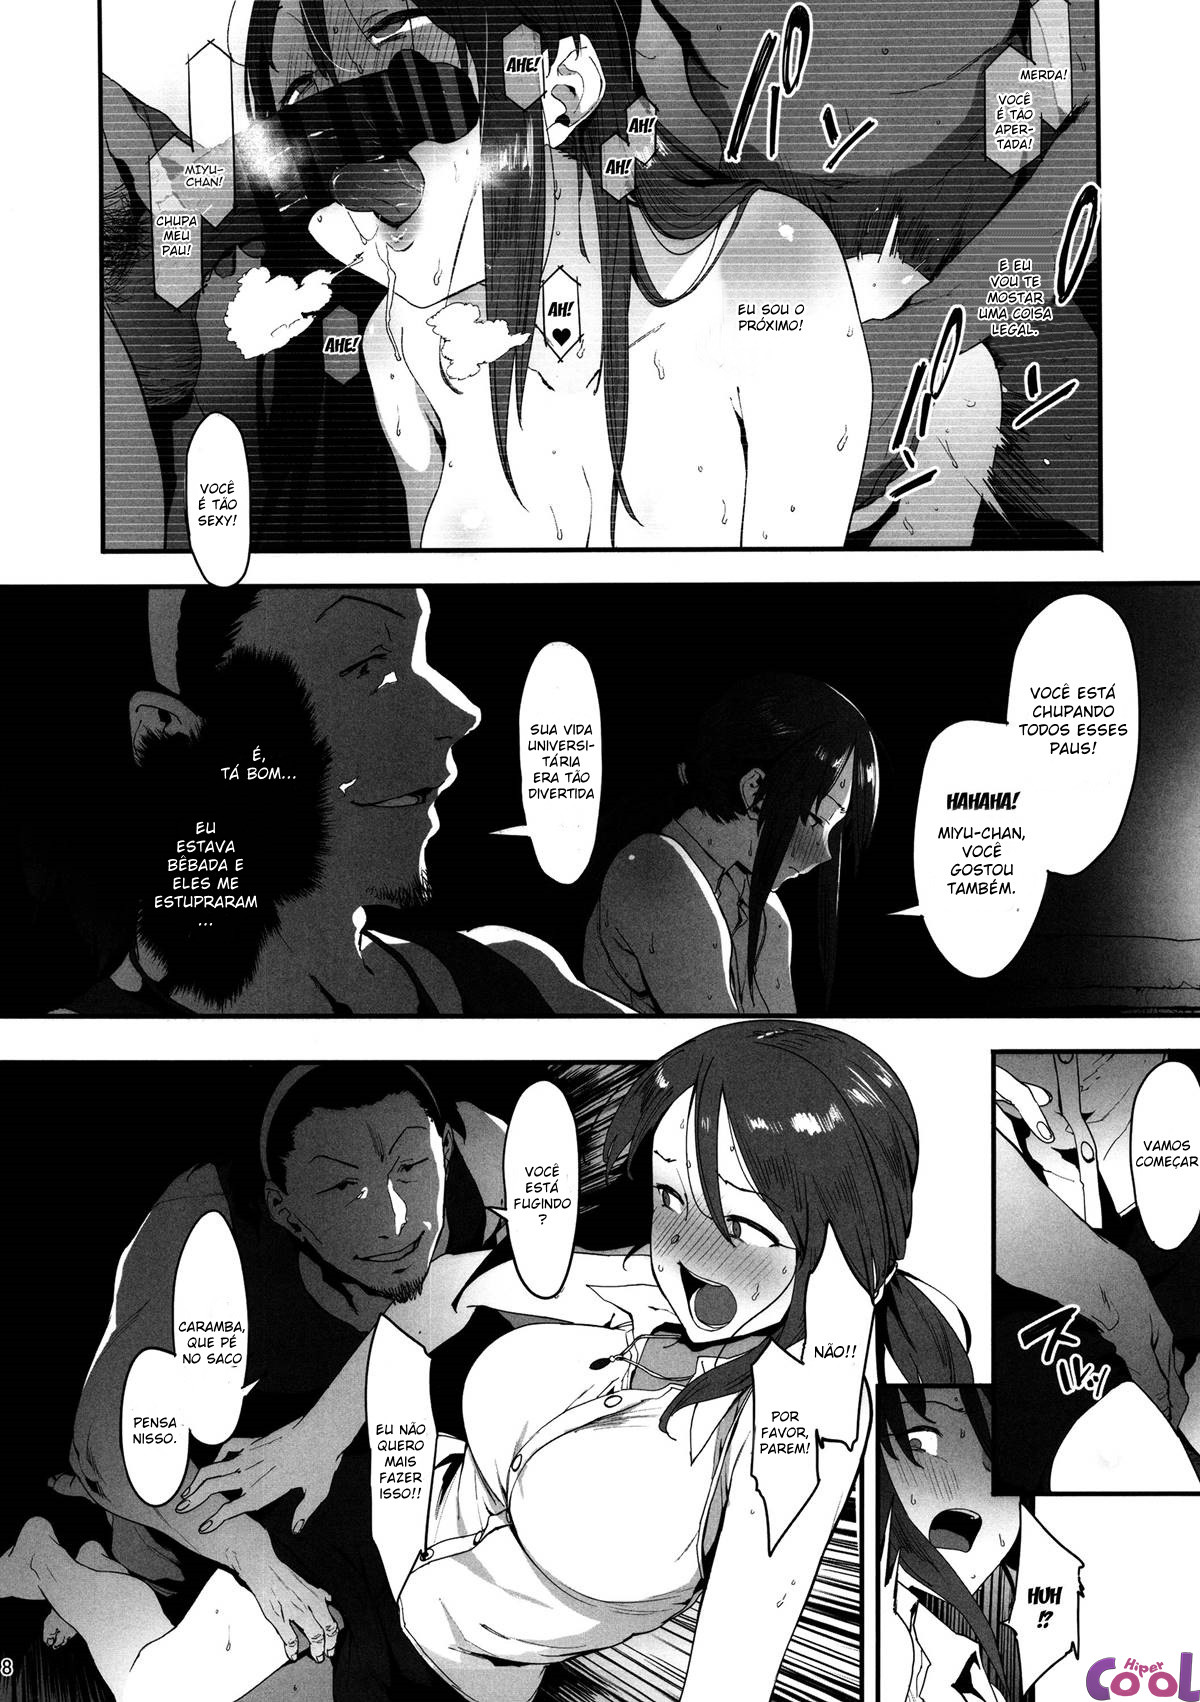 mifune-miyu-no-koukai-chapter-01-page-07.jpg